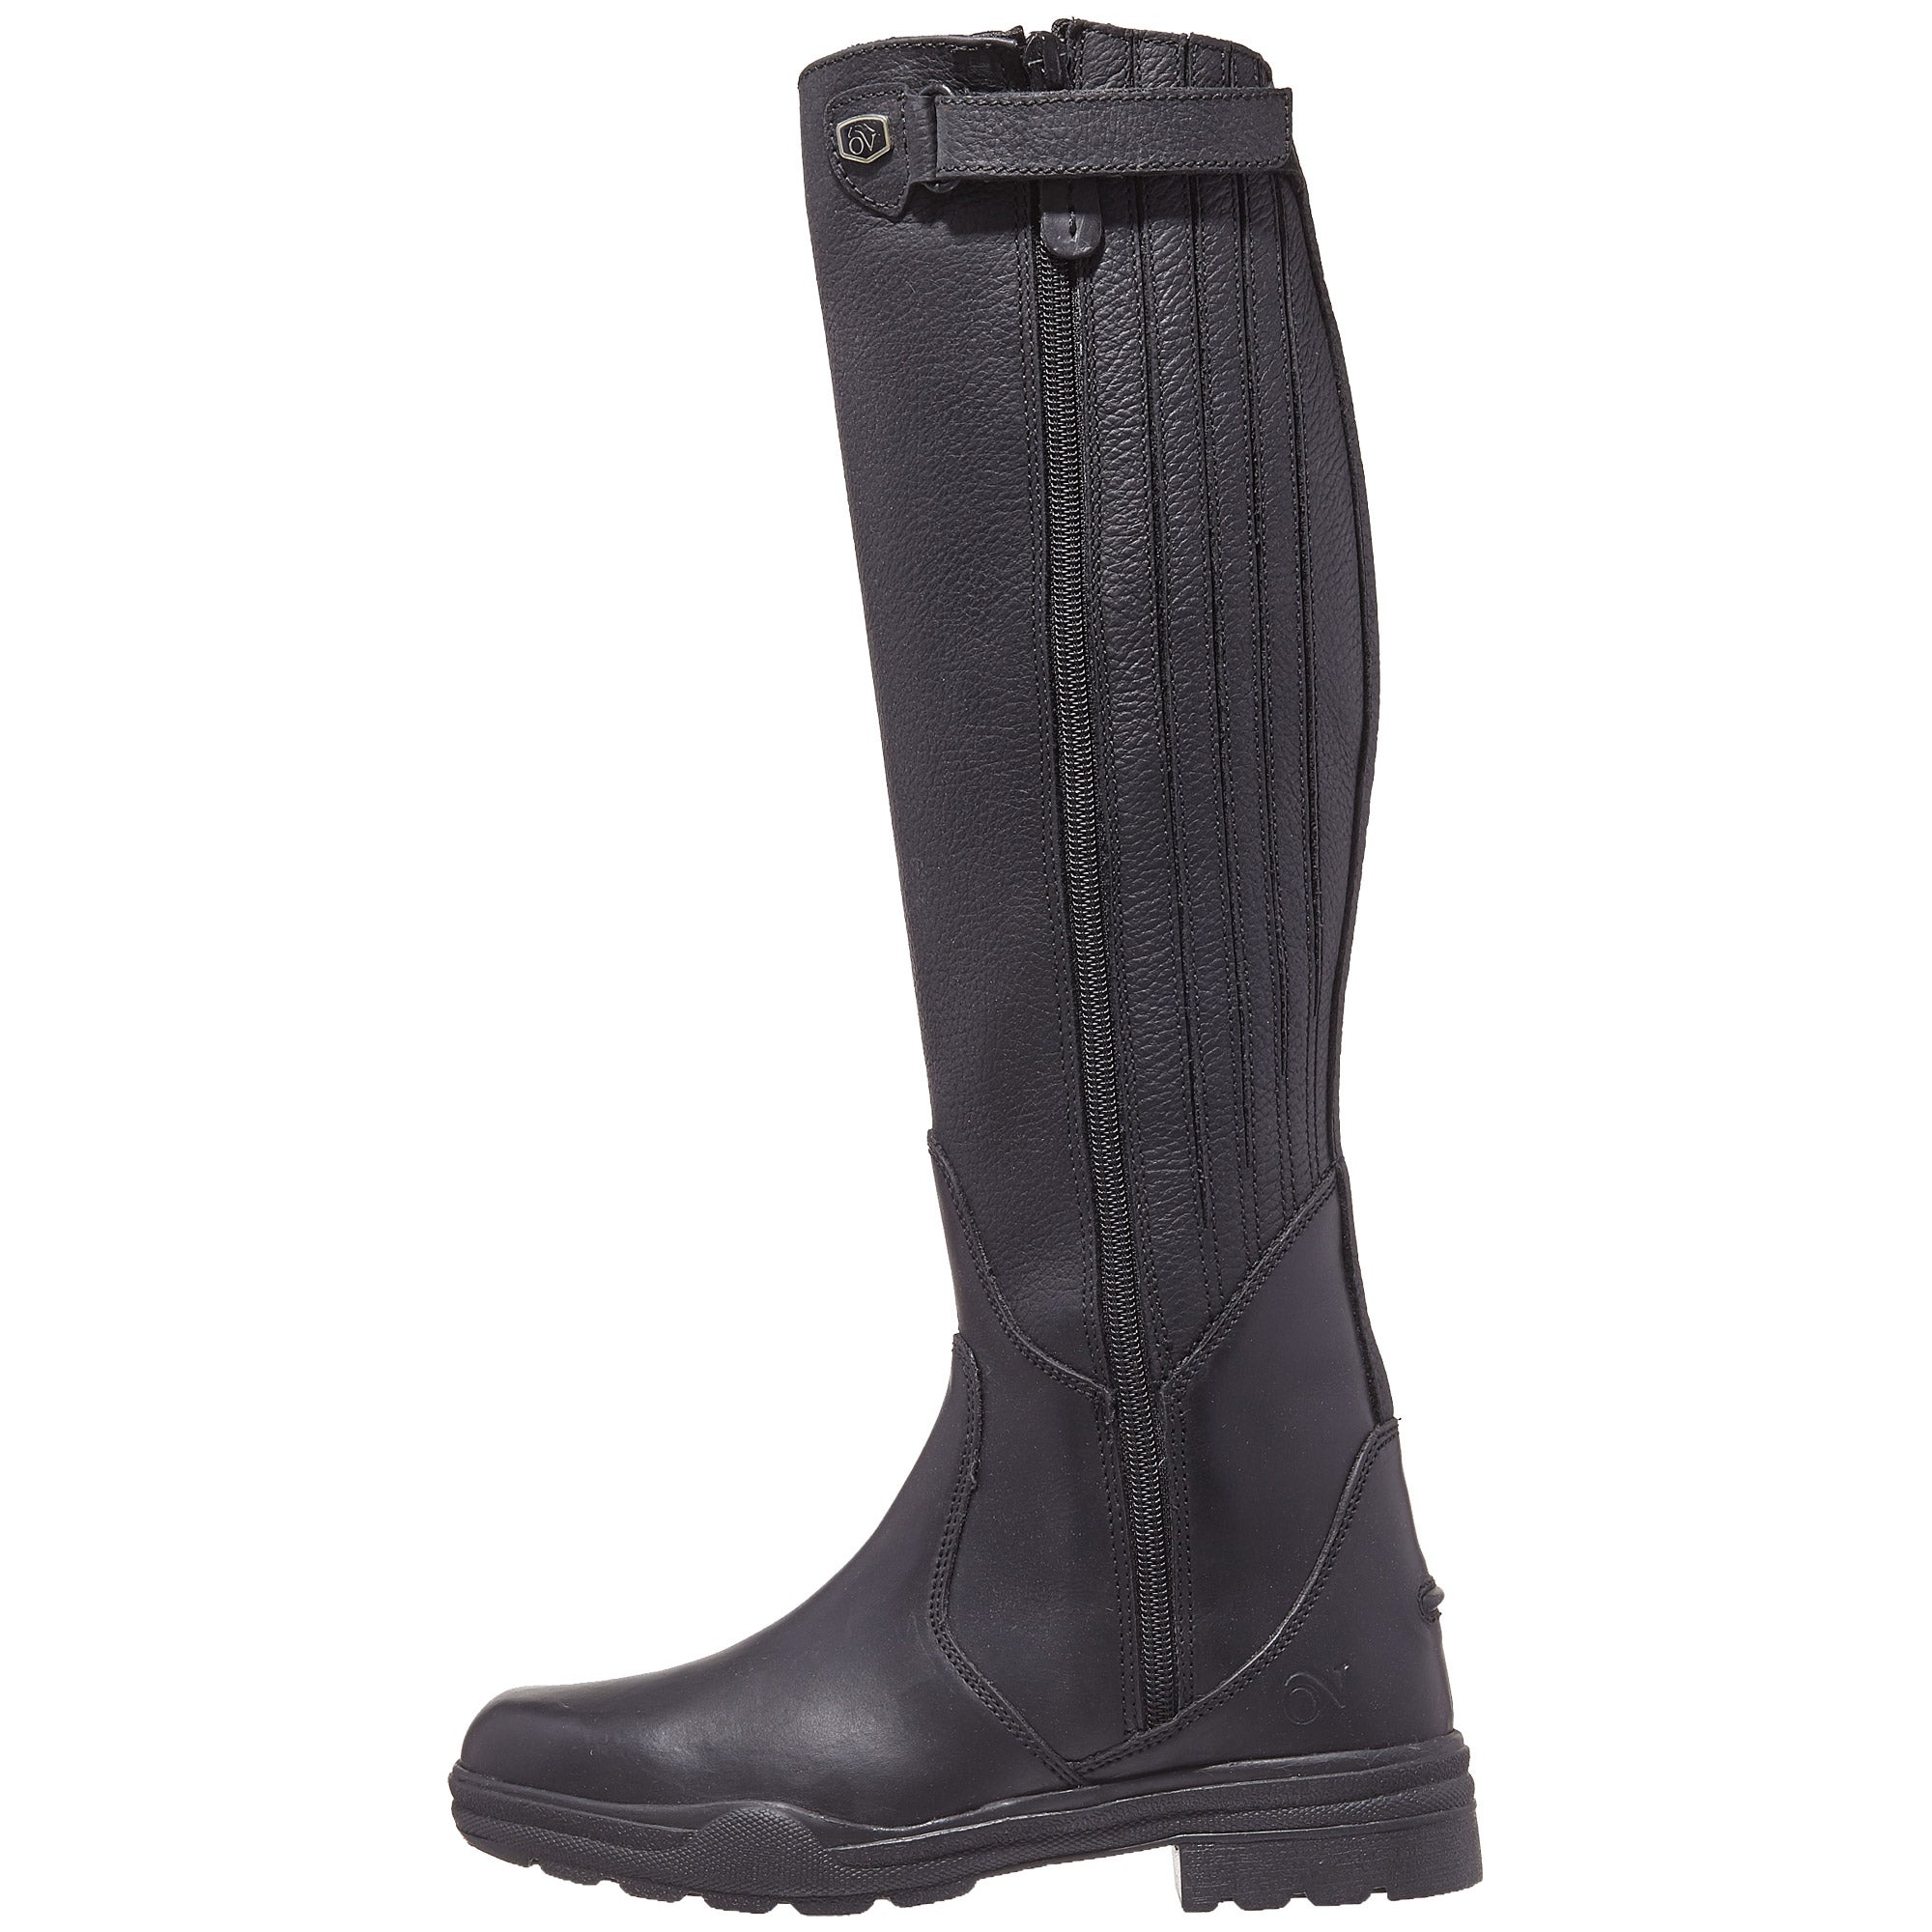 Ovation Moorland II Highrider Women's Tall Boots-Black - Riding Warehouse